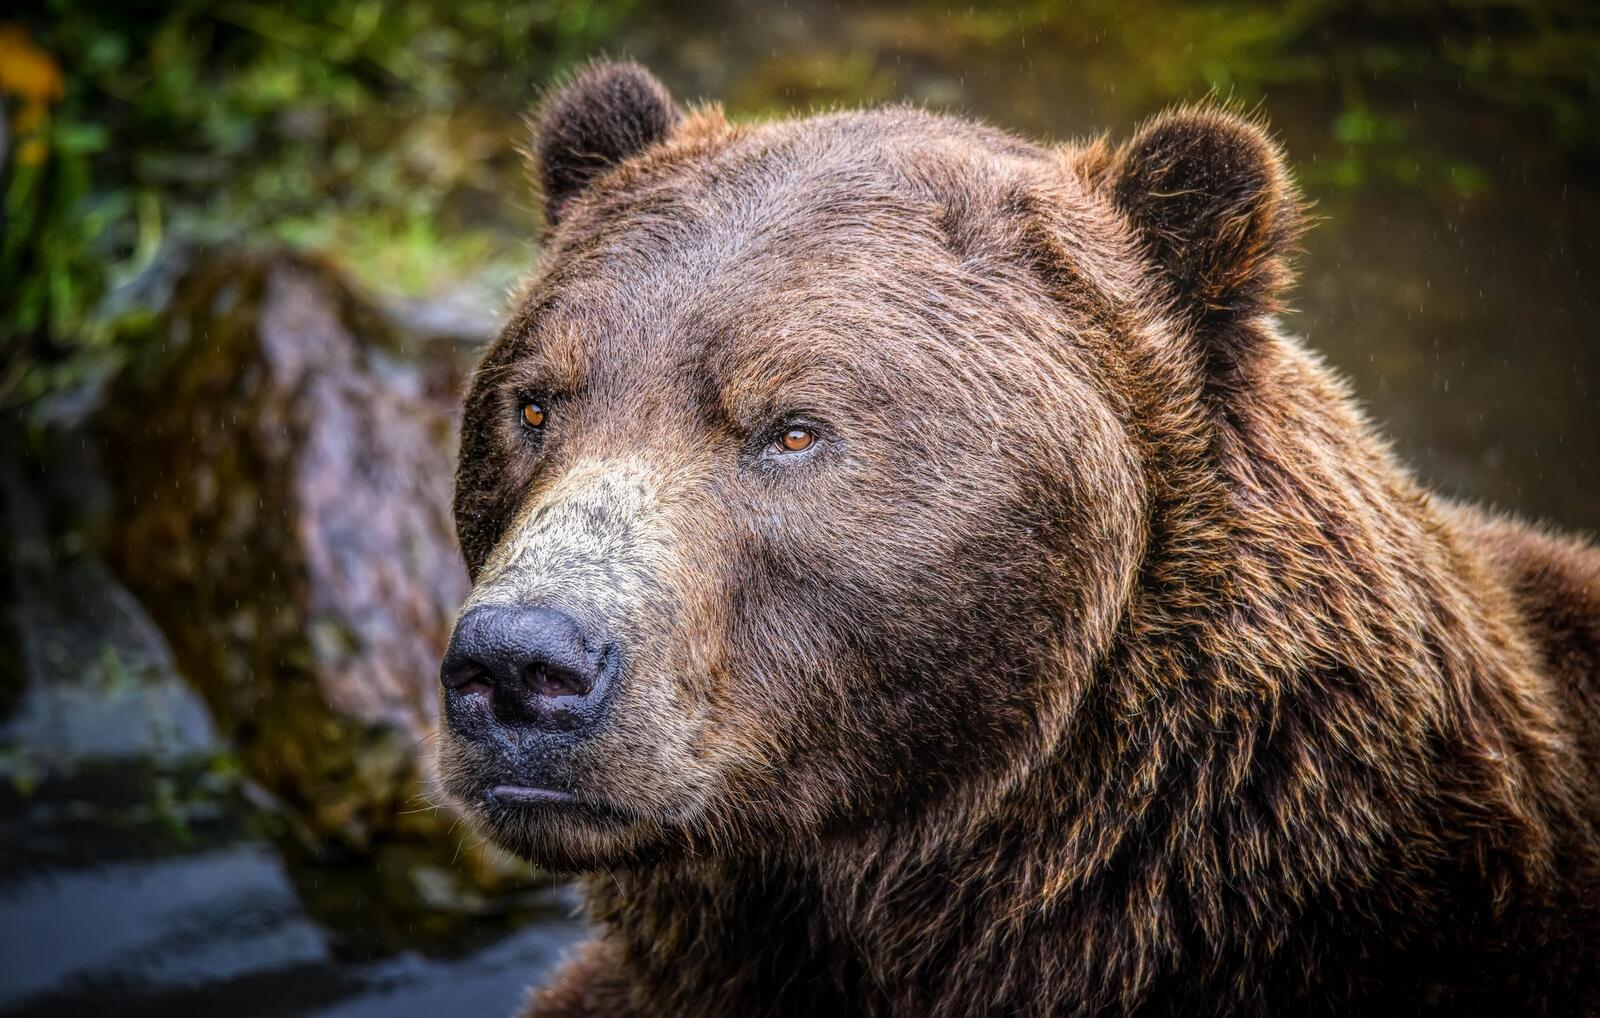 Wallpapers Alaskan brown bear predator animal on the desktop